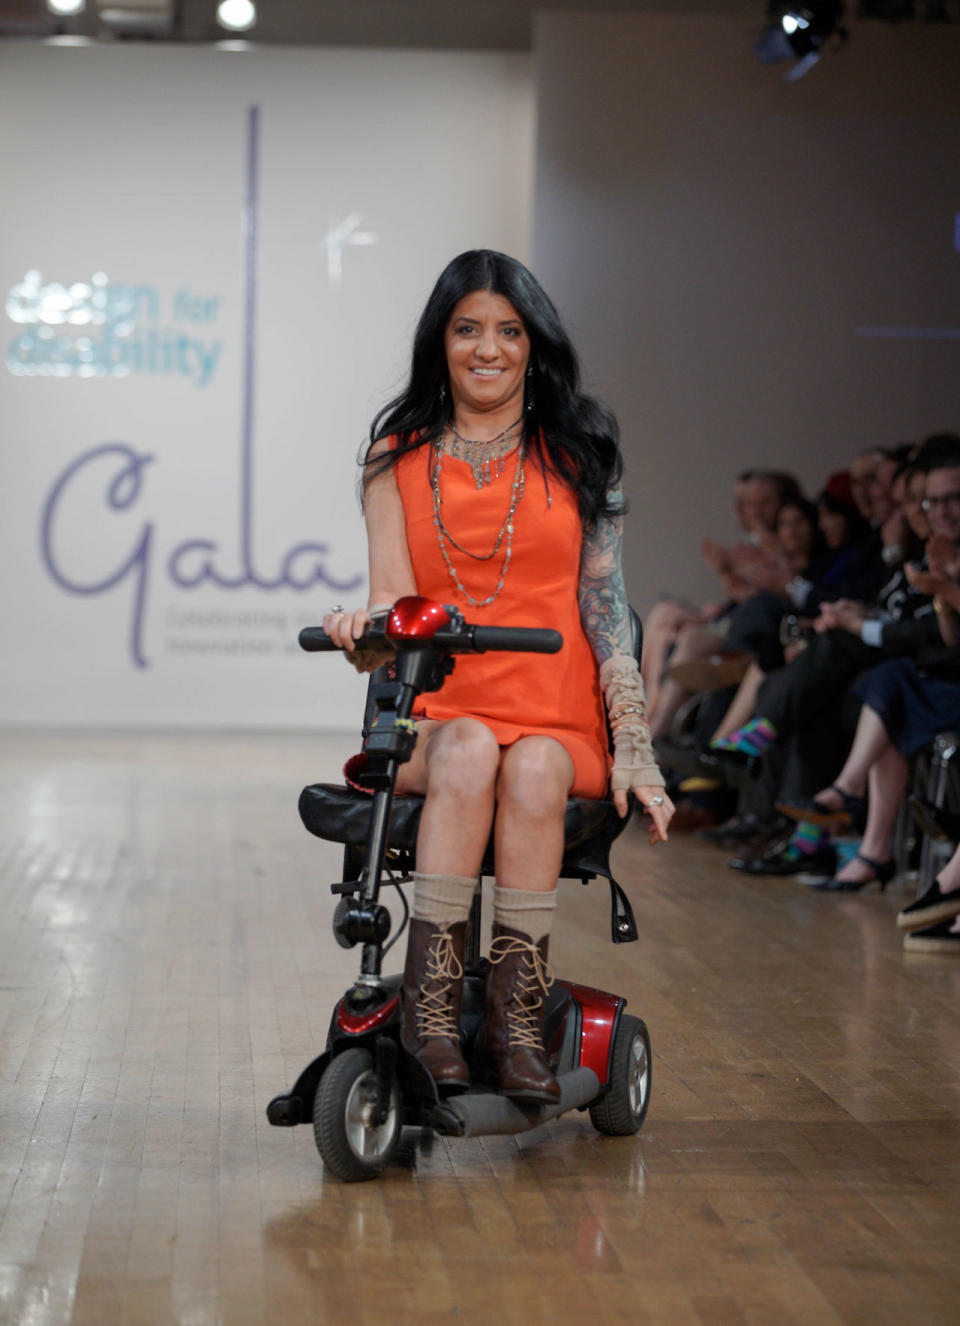 Model Bernadette Scarduzio at the Cerebral Palsy Foundation Design for Disability show. (Photo: Richard Copier)